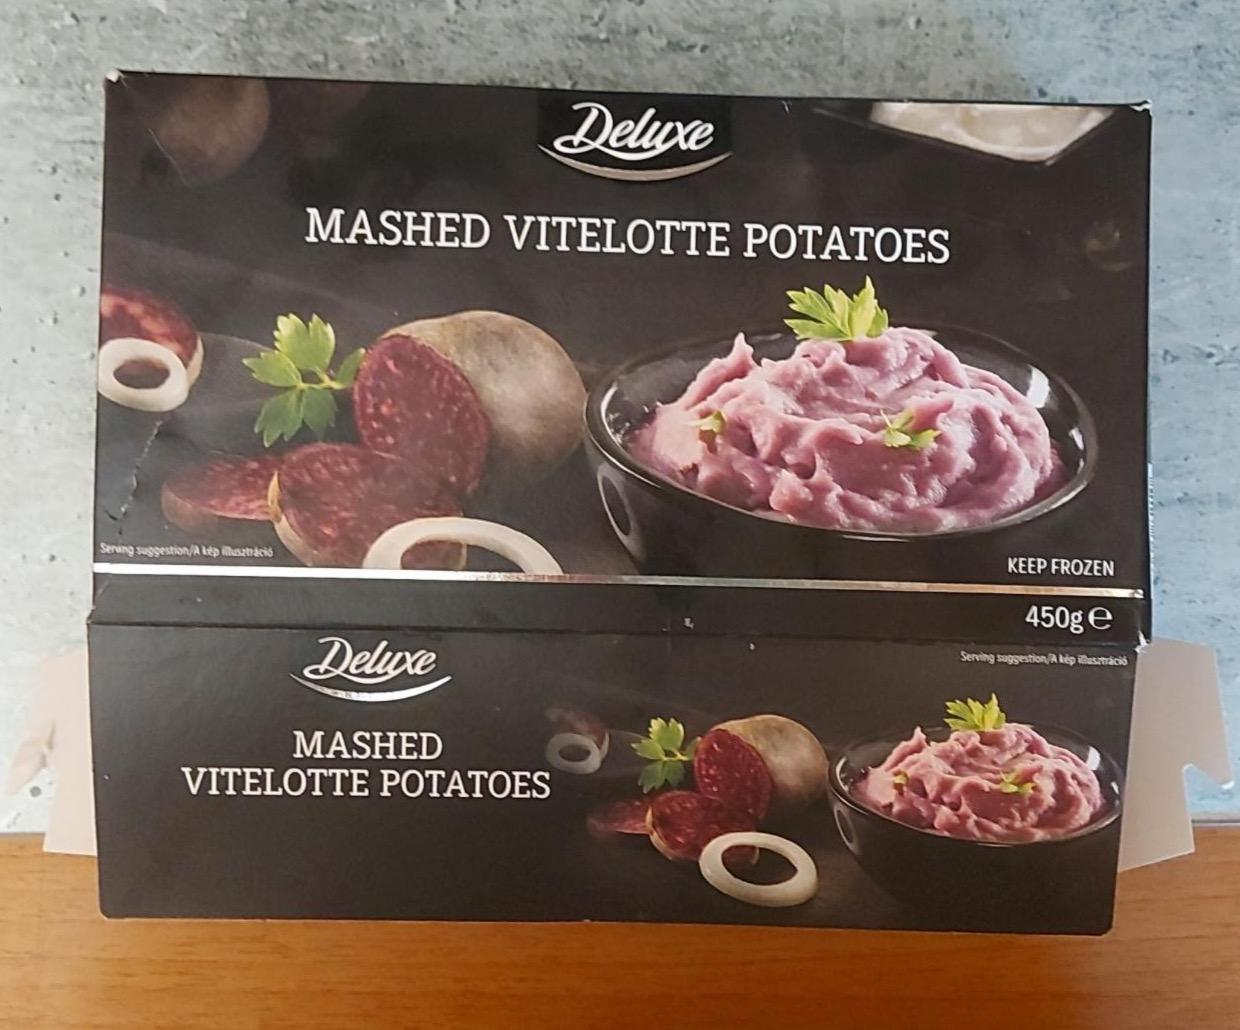 Képek - Mashed vitelotte potatoes Deluxe